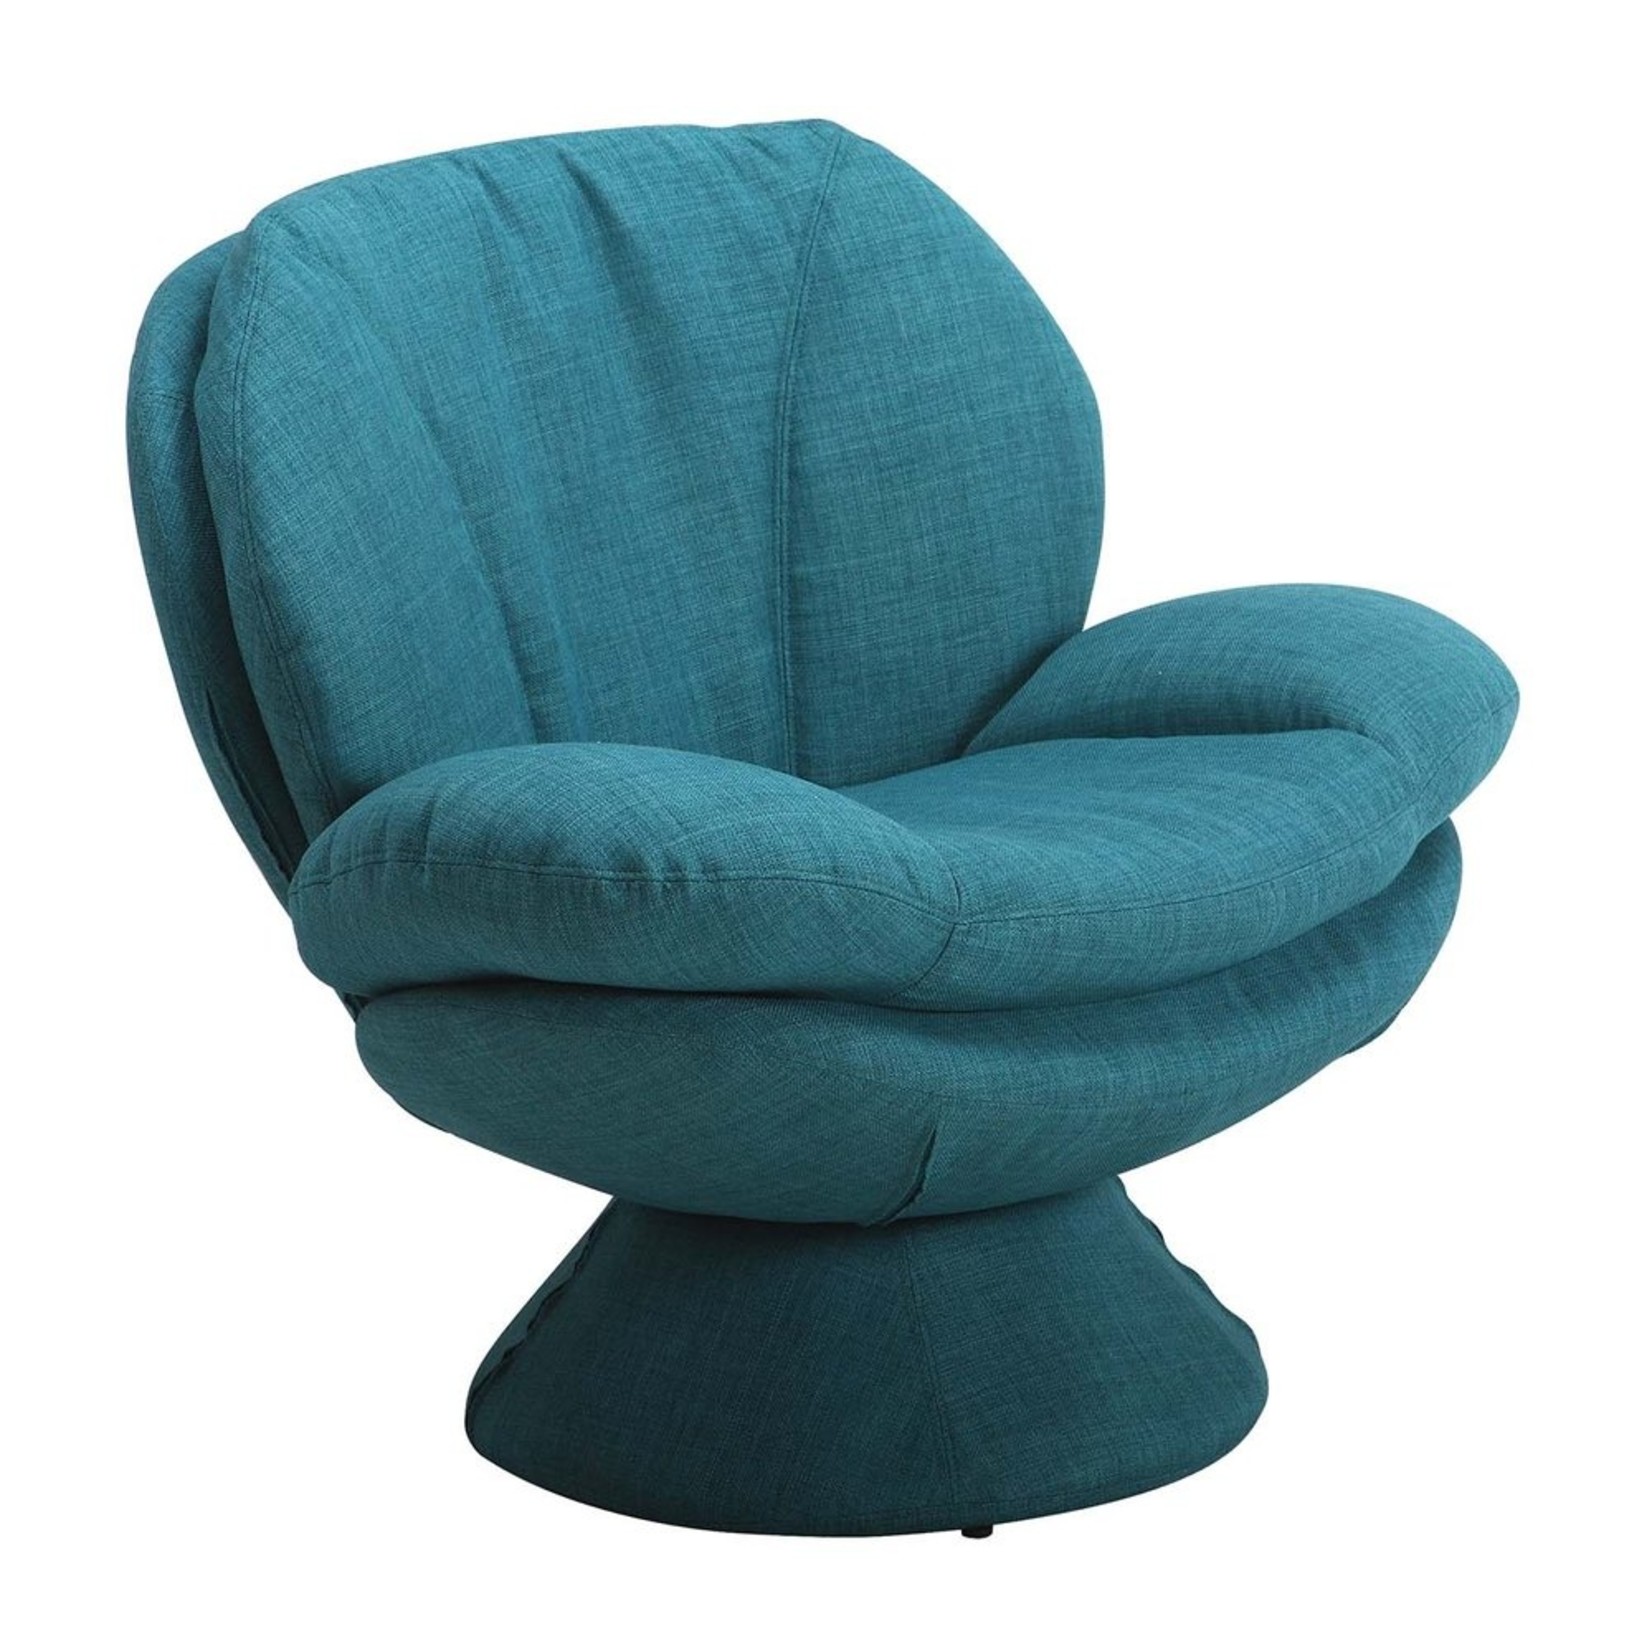 PROGRESSIVE Leisure Accent Chair Turquoise